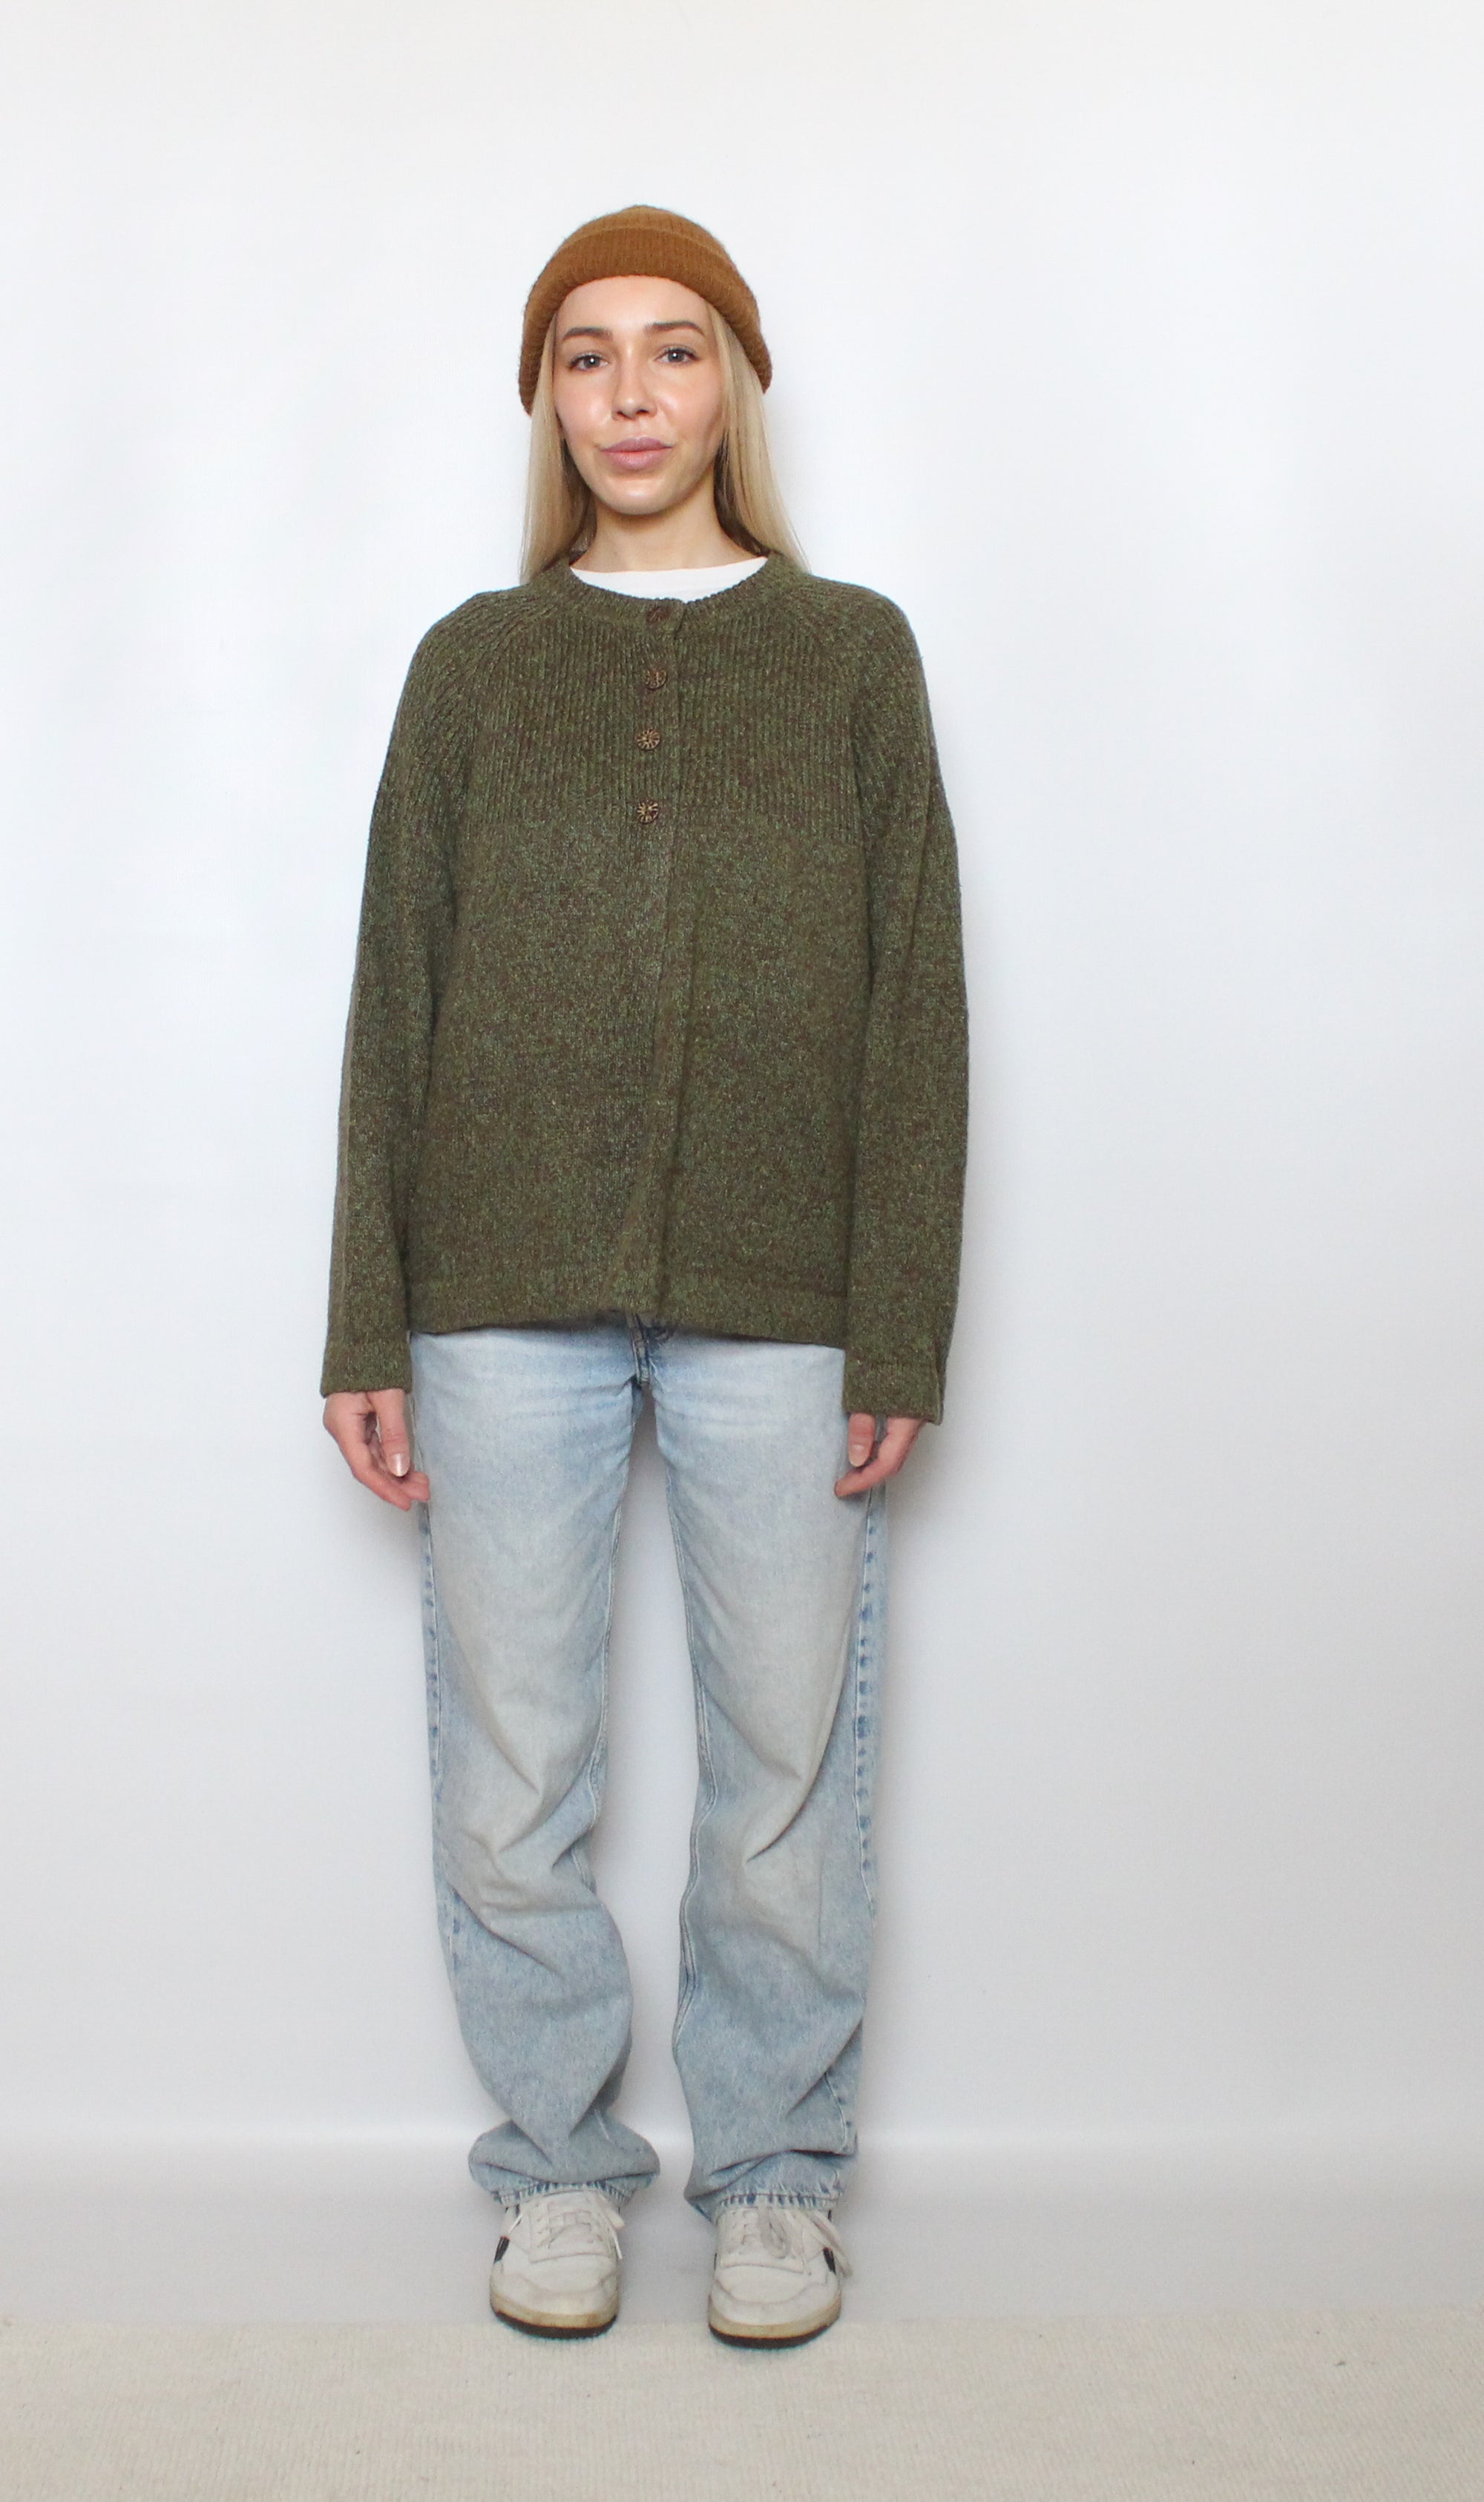 Woolrich Sweater Cardigan